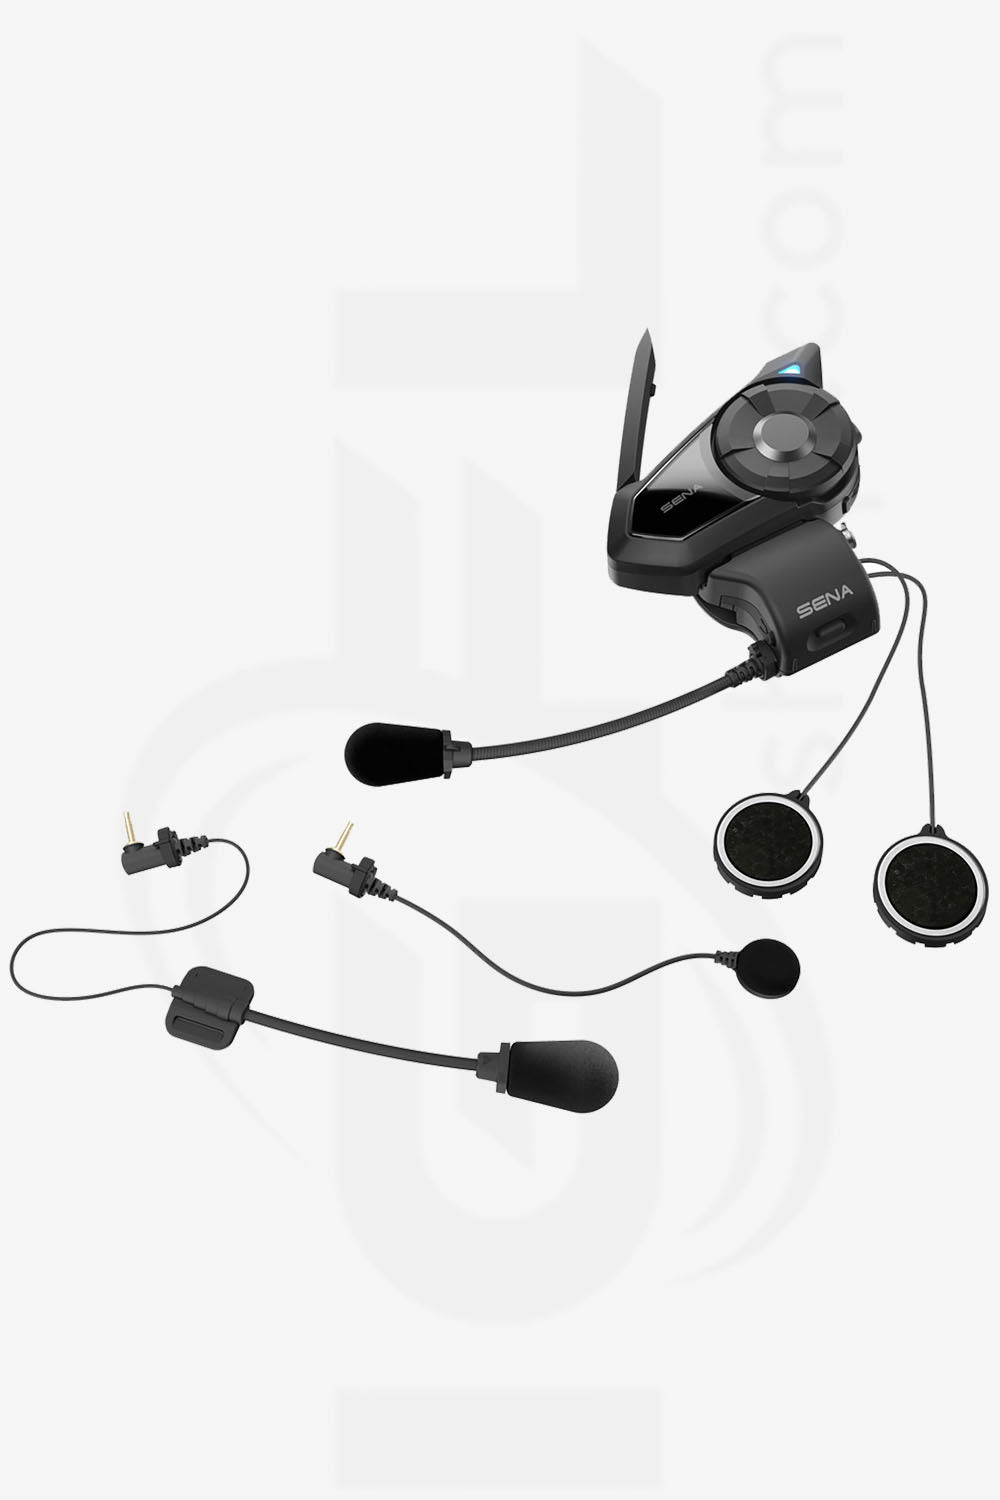 SENA 30K Mesh Intercom Motorcycle Bluetooth Headset Dual Pack